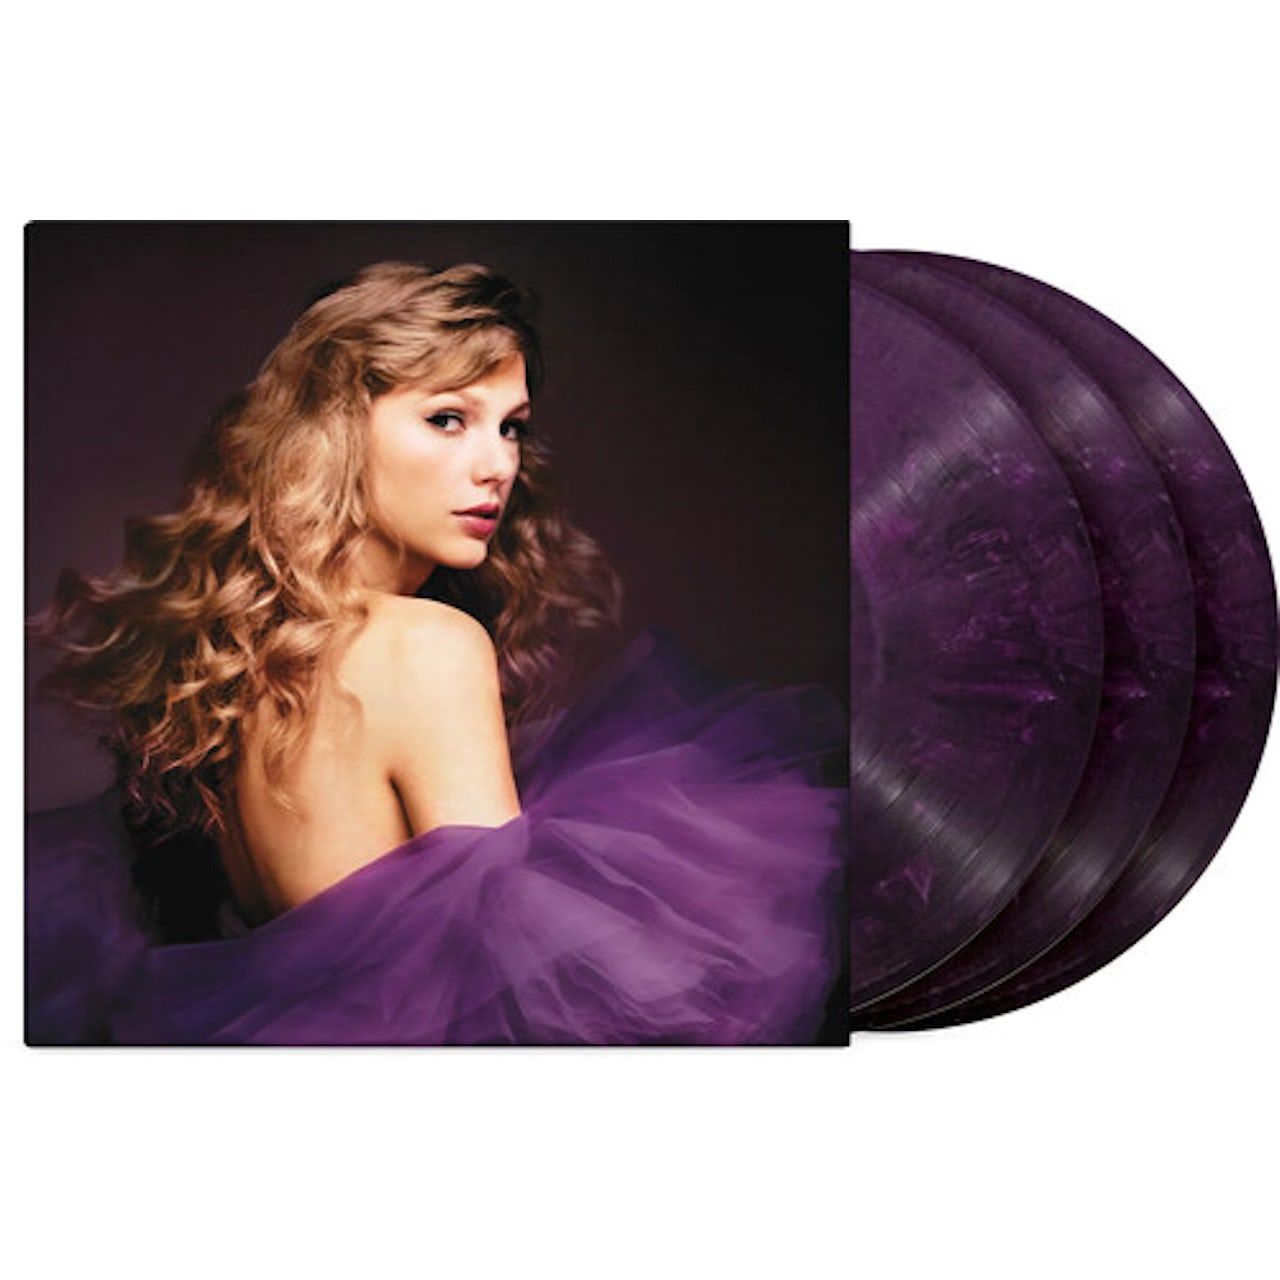 0602448438065, Виниловая пластинка Swift, Taylor, Speak Now (Taylor's Version) (coloured)